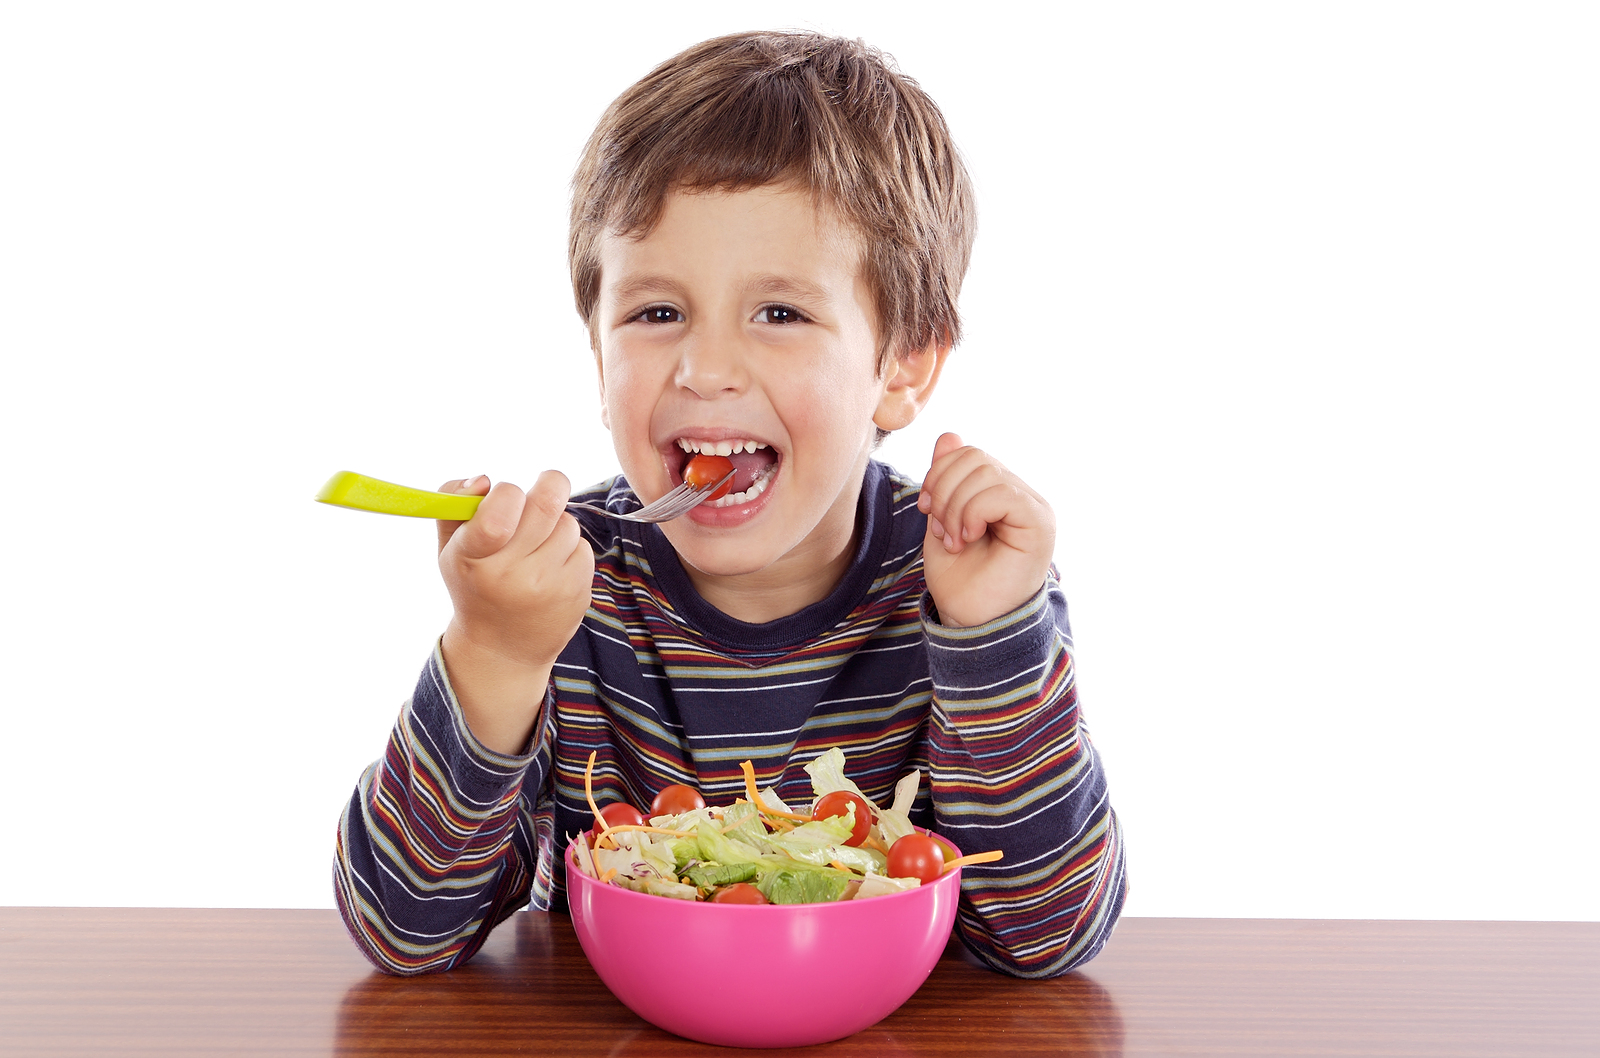 Child-eating-healthy-food-kids-salad-children-boy-8d45a7.jpg